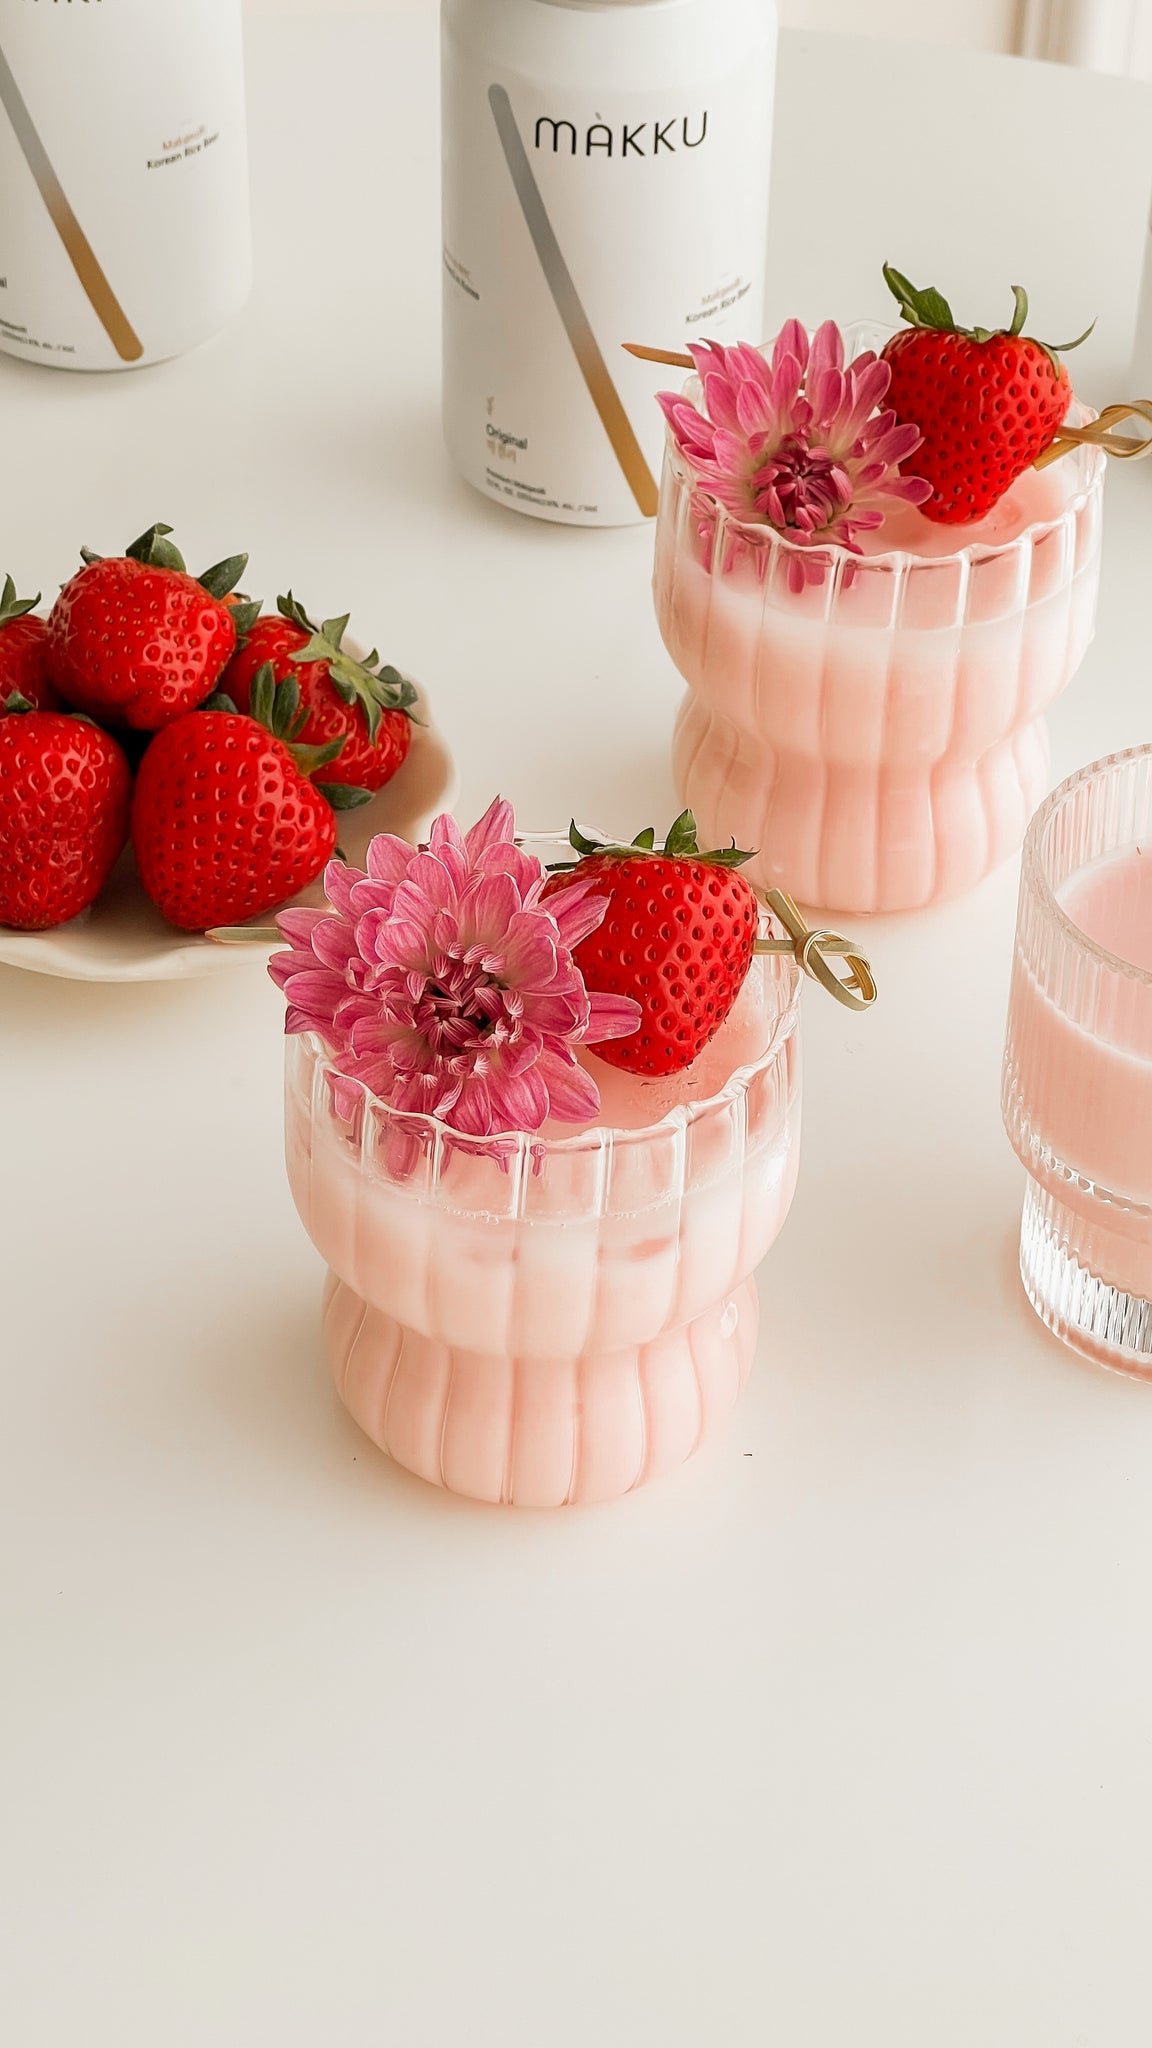 Strawberry Milk Màkku